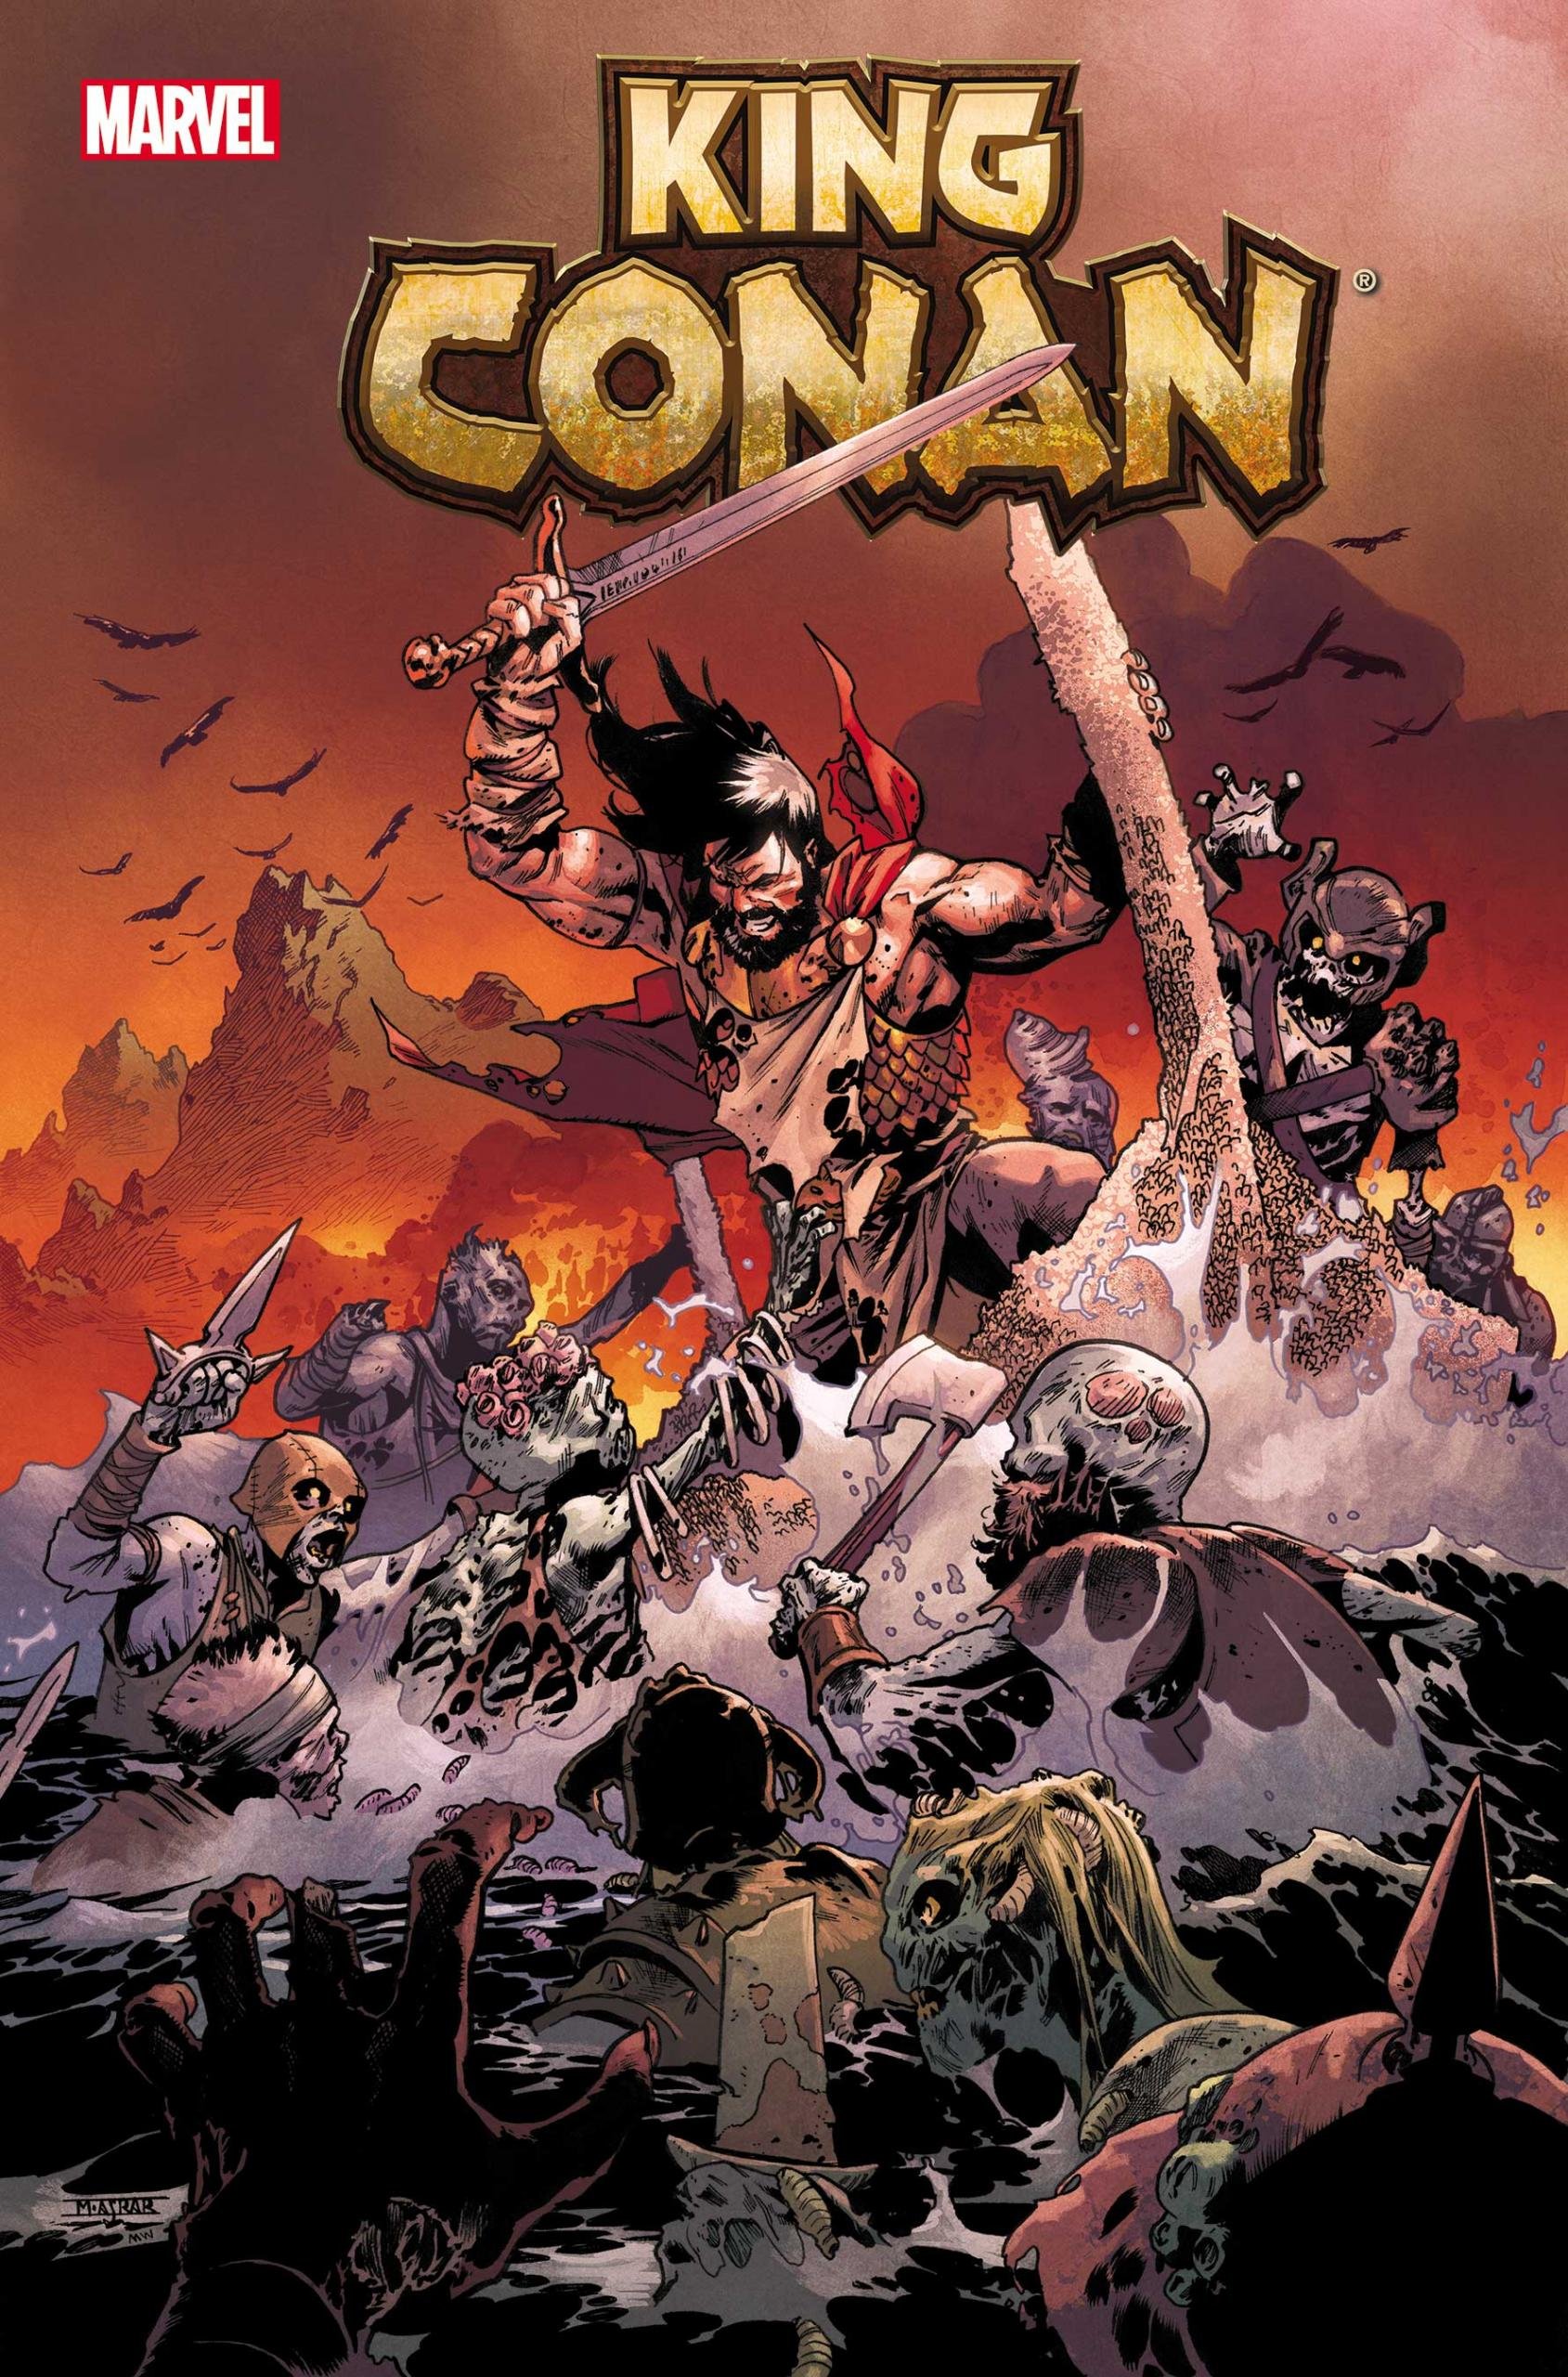 Cover di King Conan 6 di Mahmud Asrar, ultima uscita per la Marvel